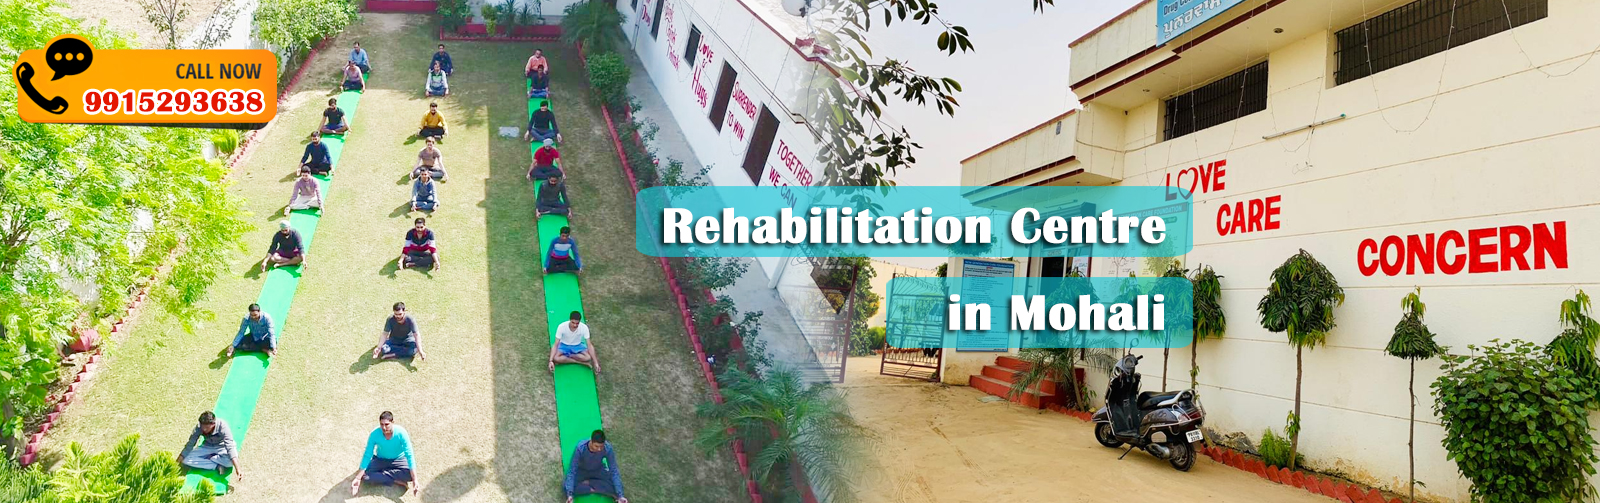 Rehabilitation Centre in Mohali